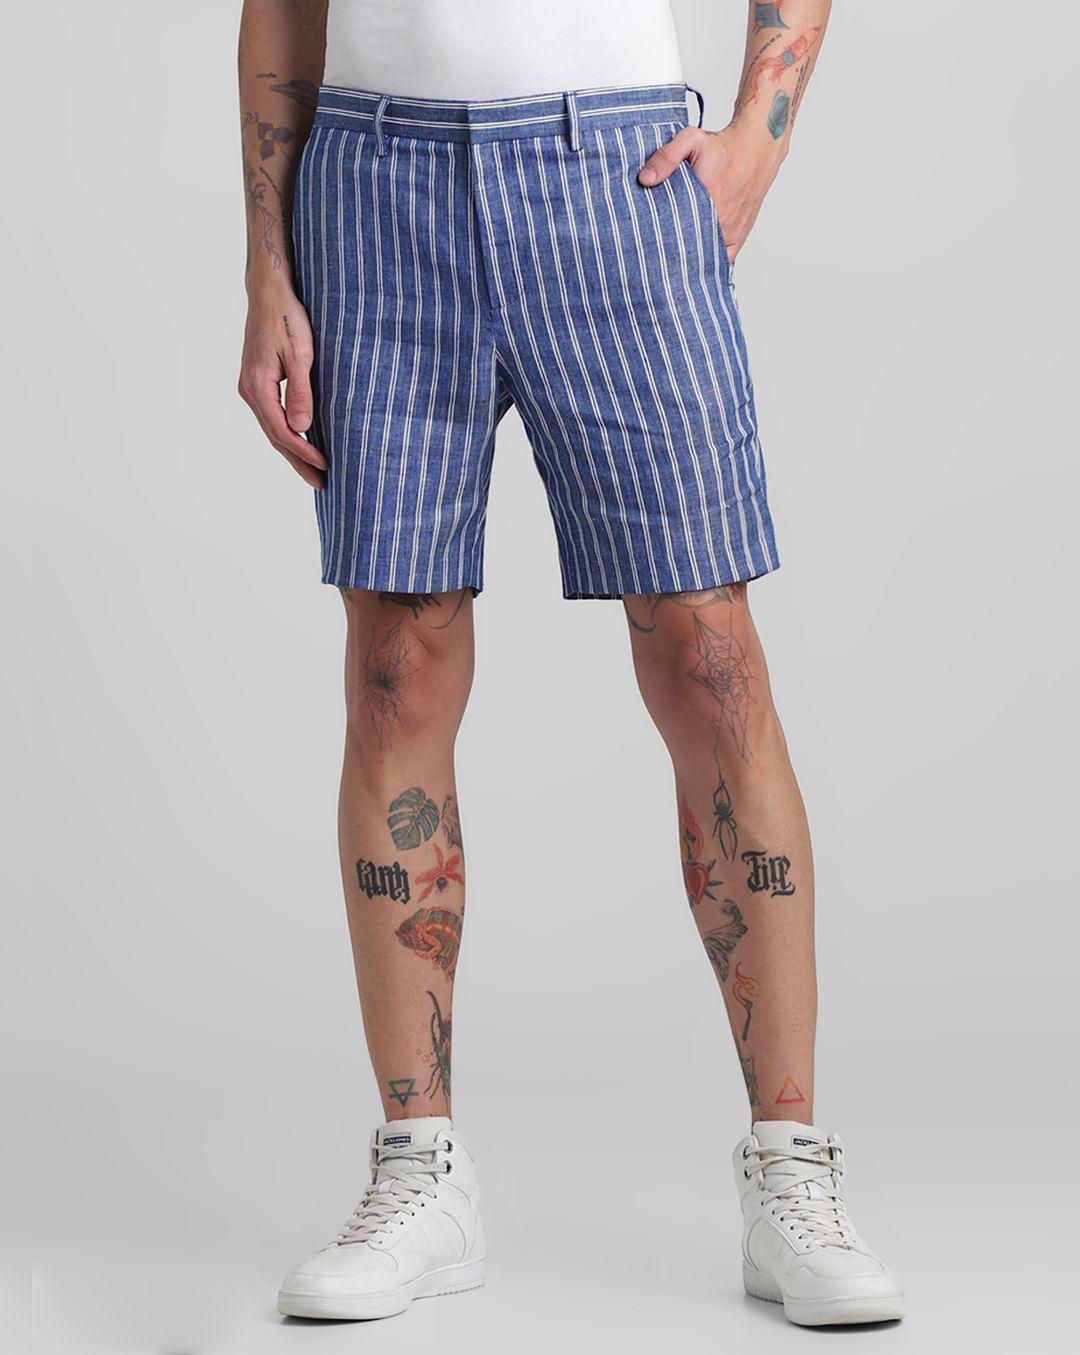 blue striped co-ord set shorts